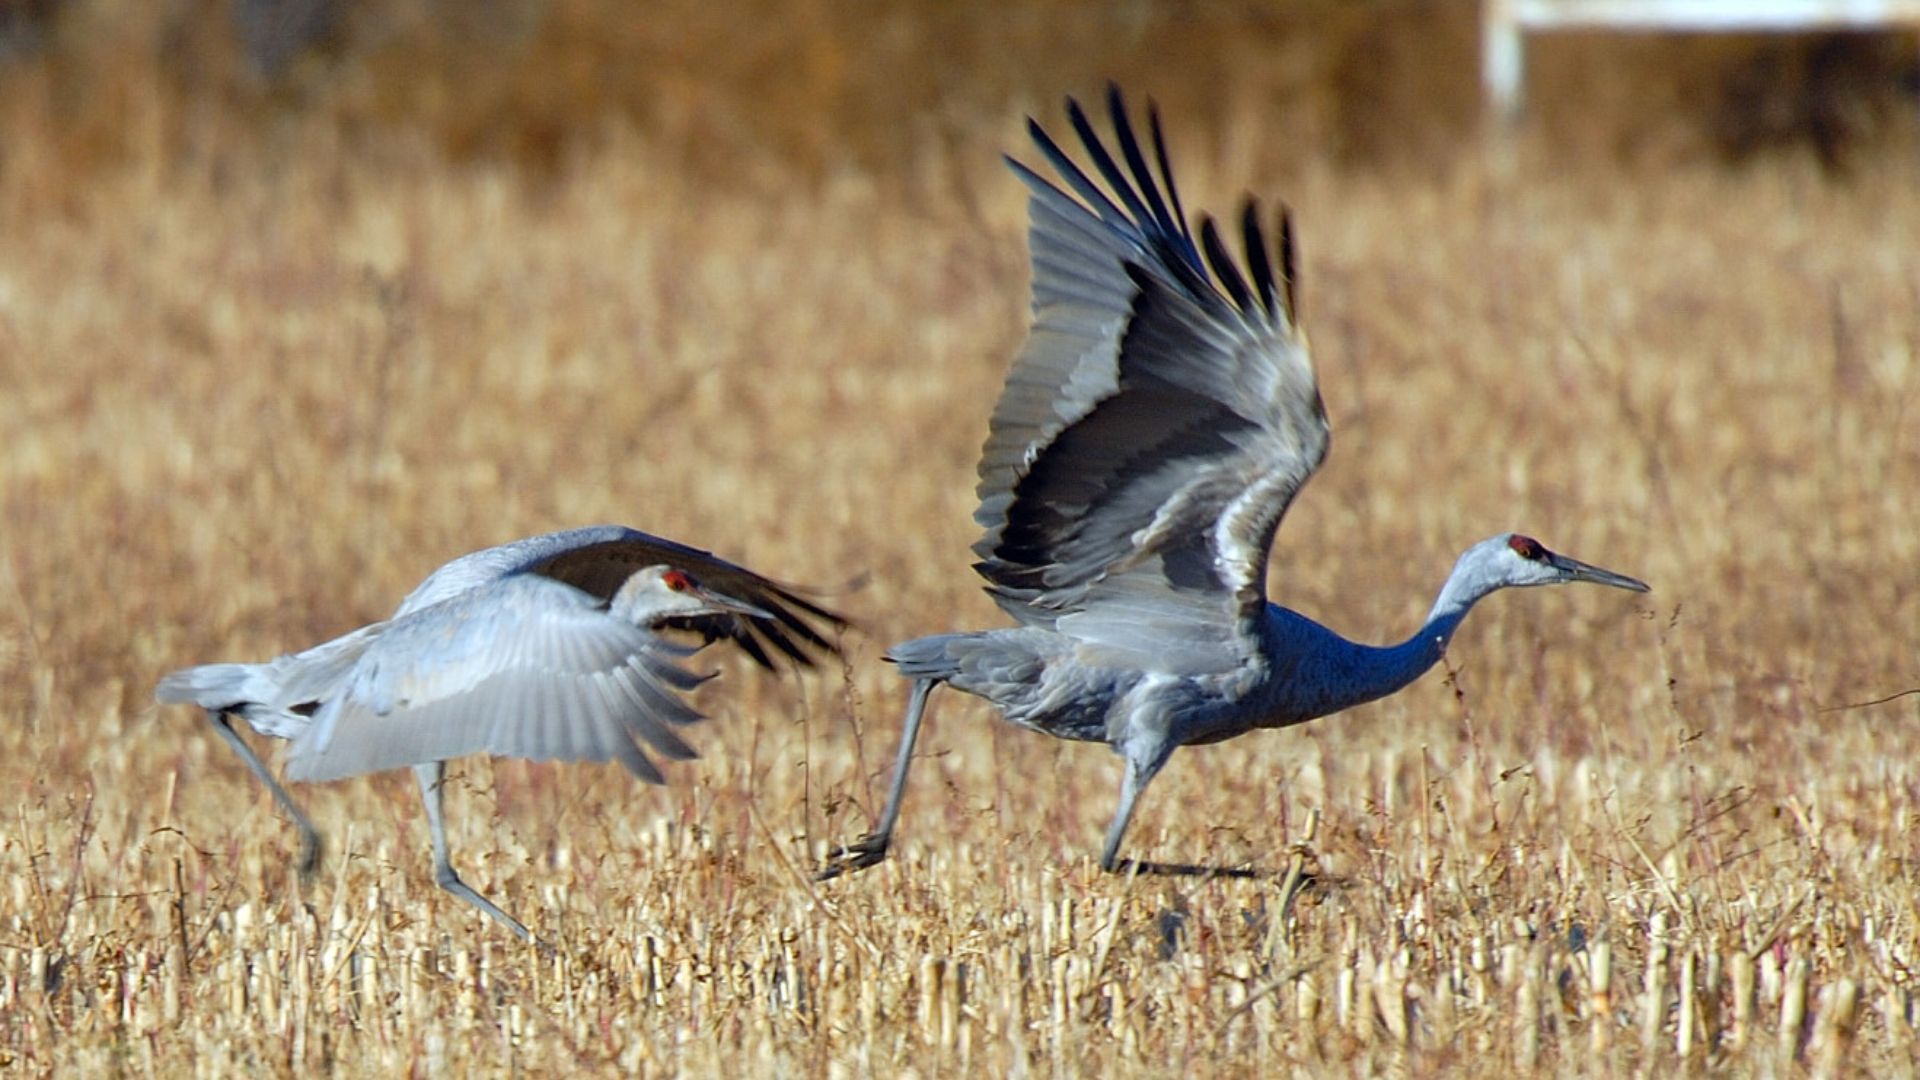  Bird-watchers can gander at sandhill cranes during Uintah Basin migration 